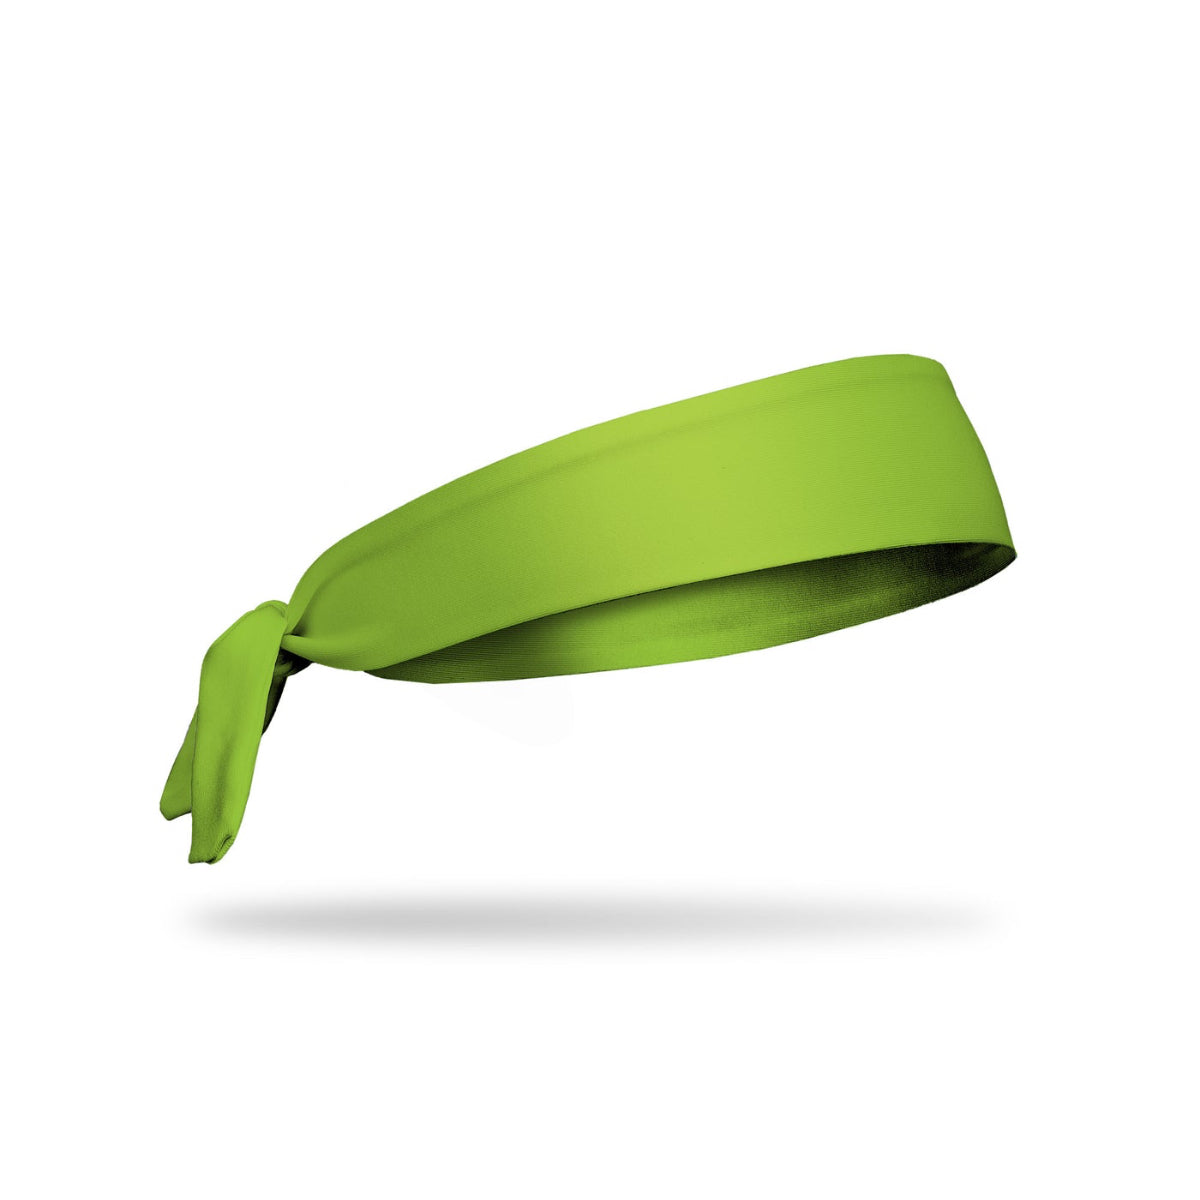 JUNK Green Apple Headband (Flex Tie)